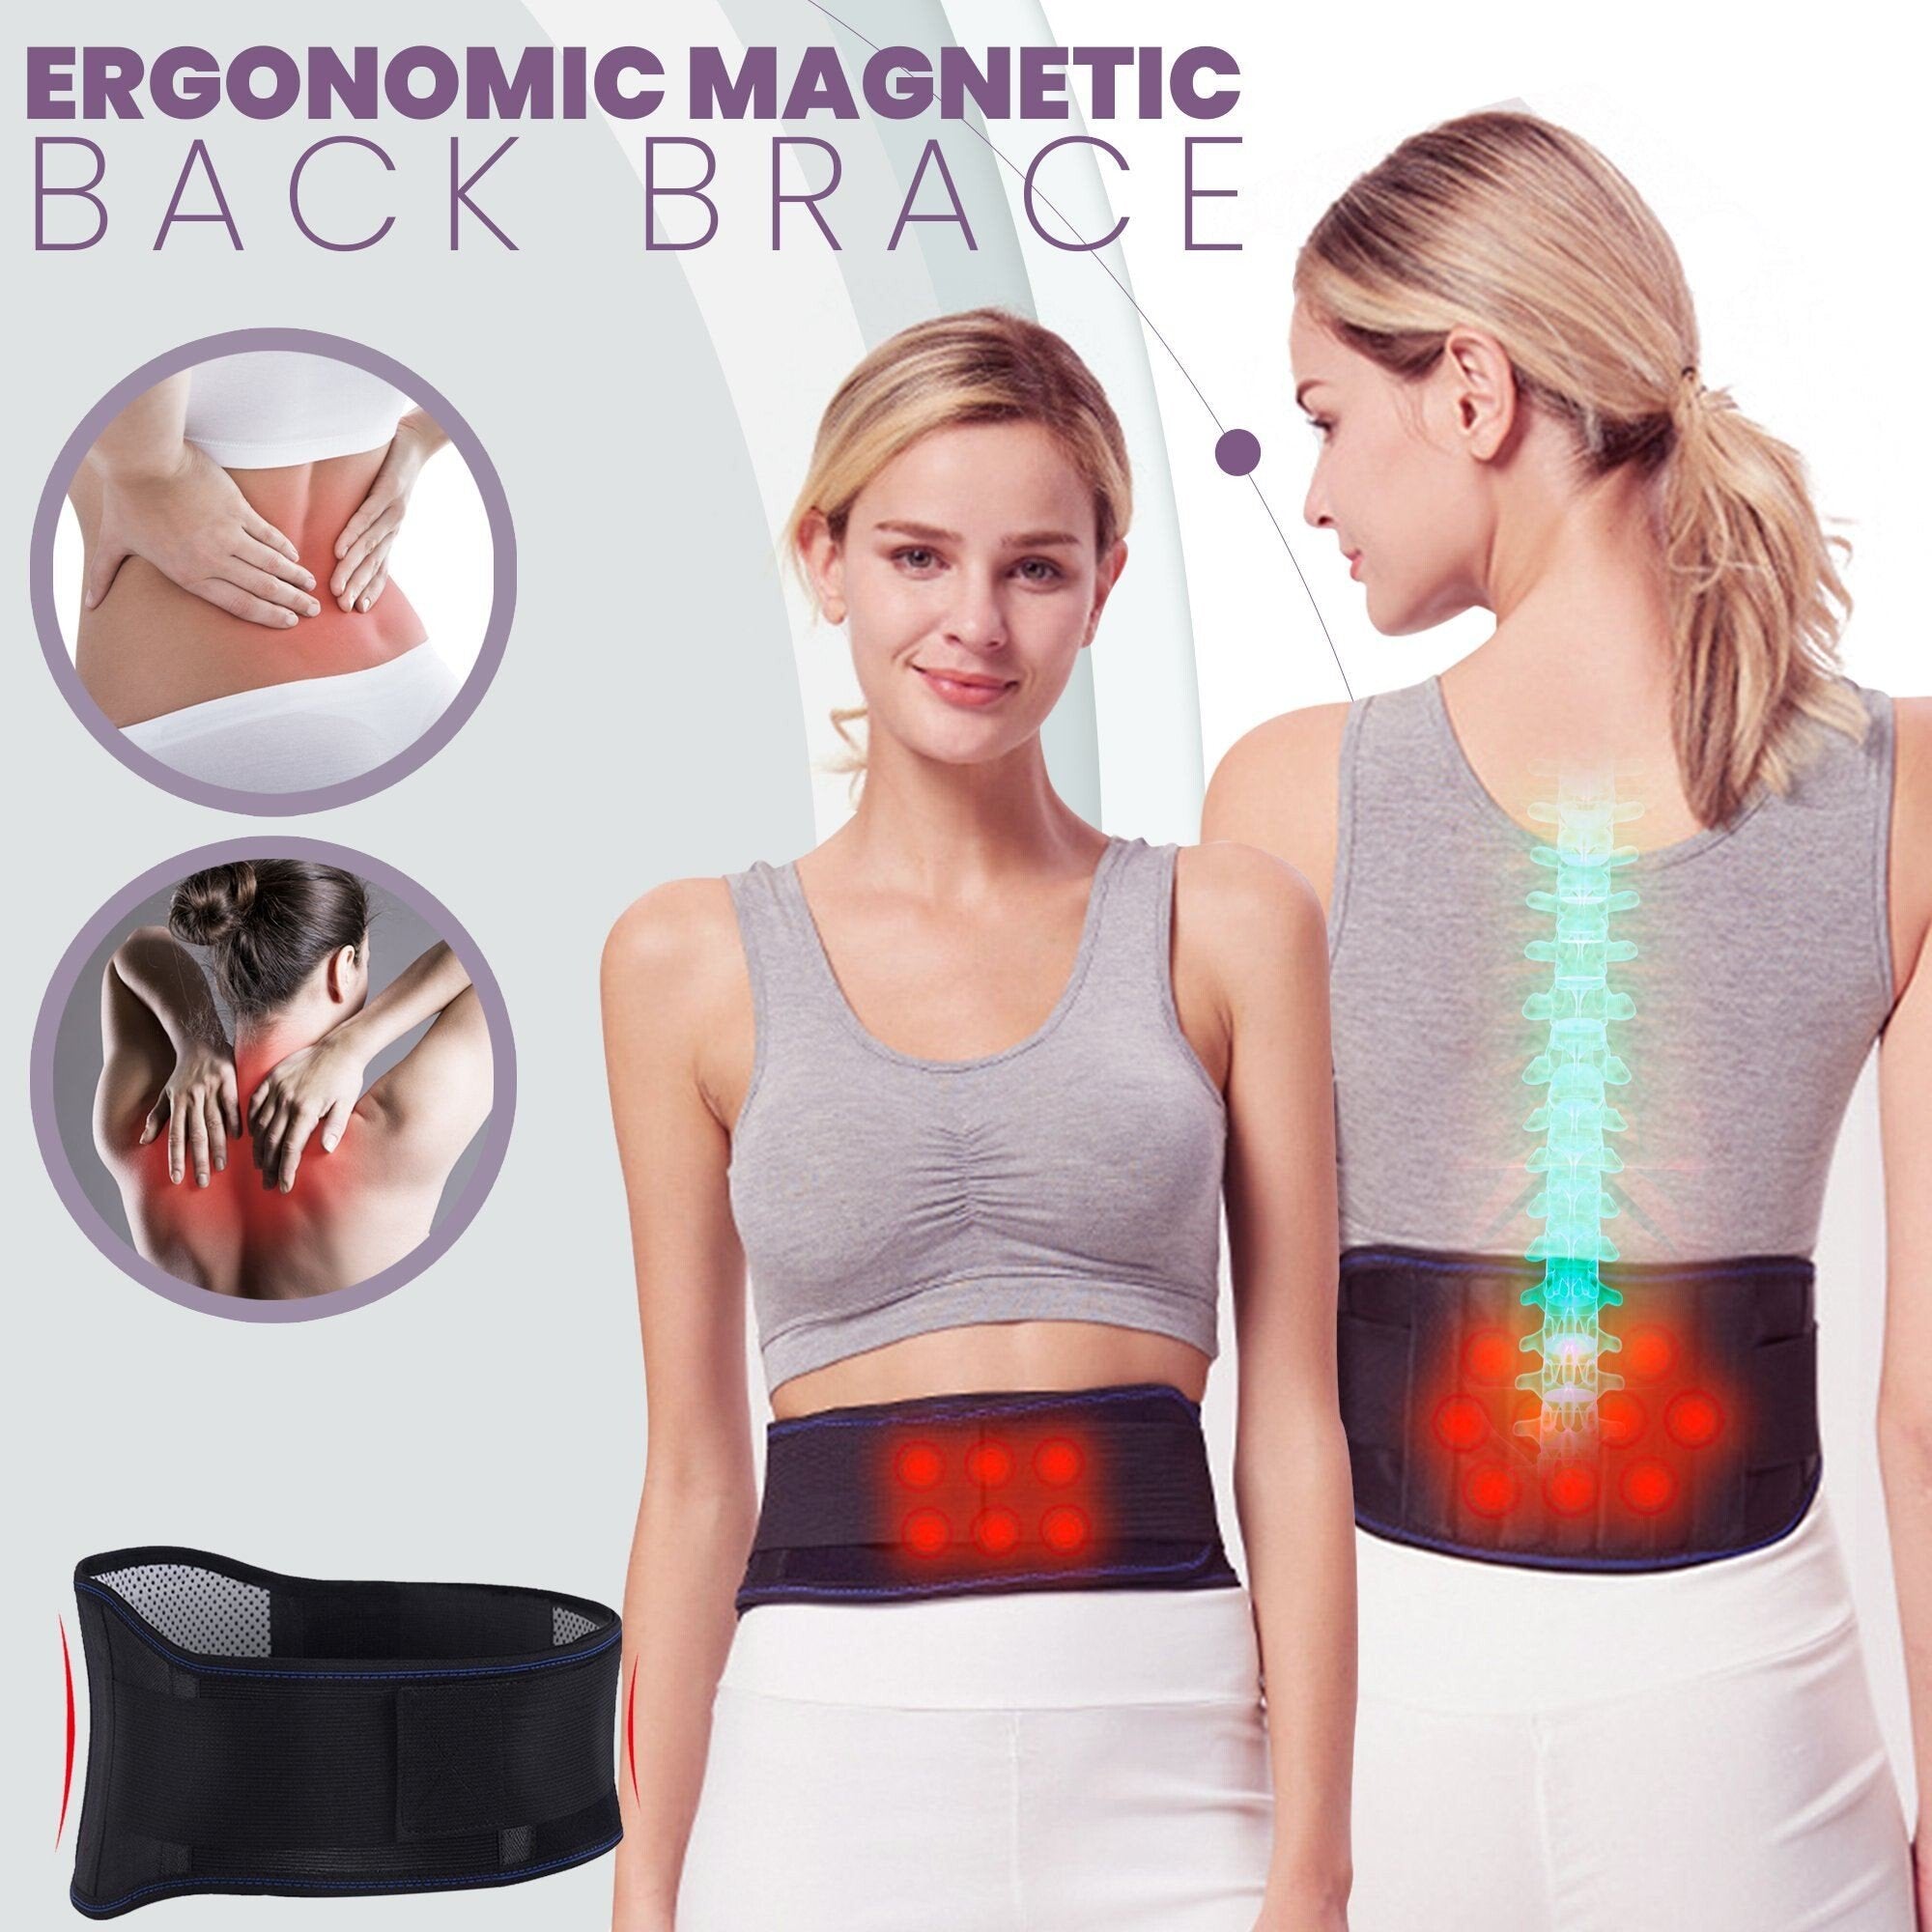 Ergonomic Magnetic Back Brace